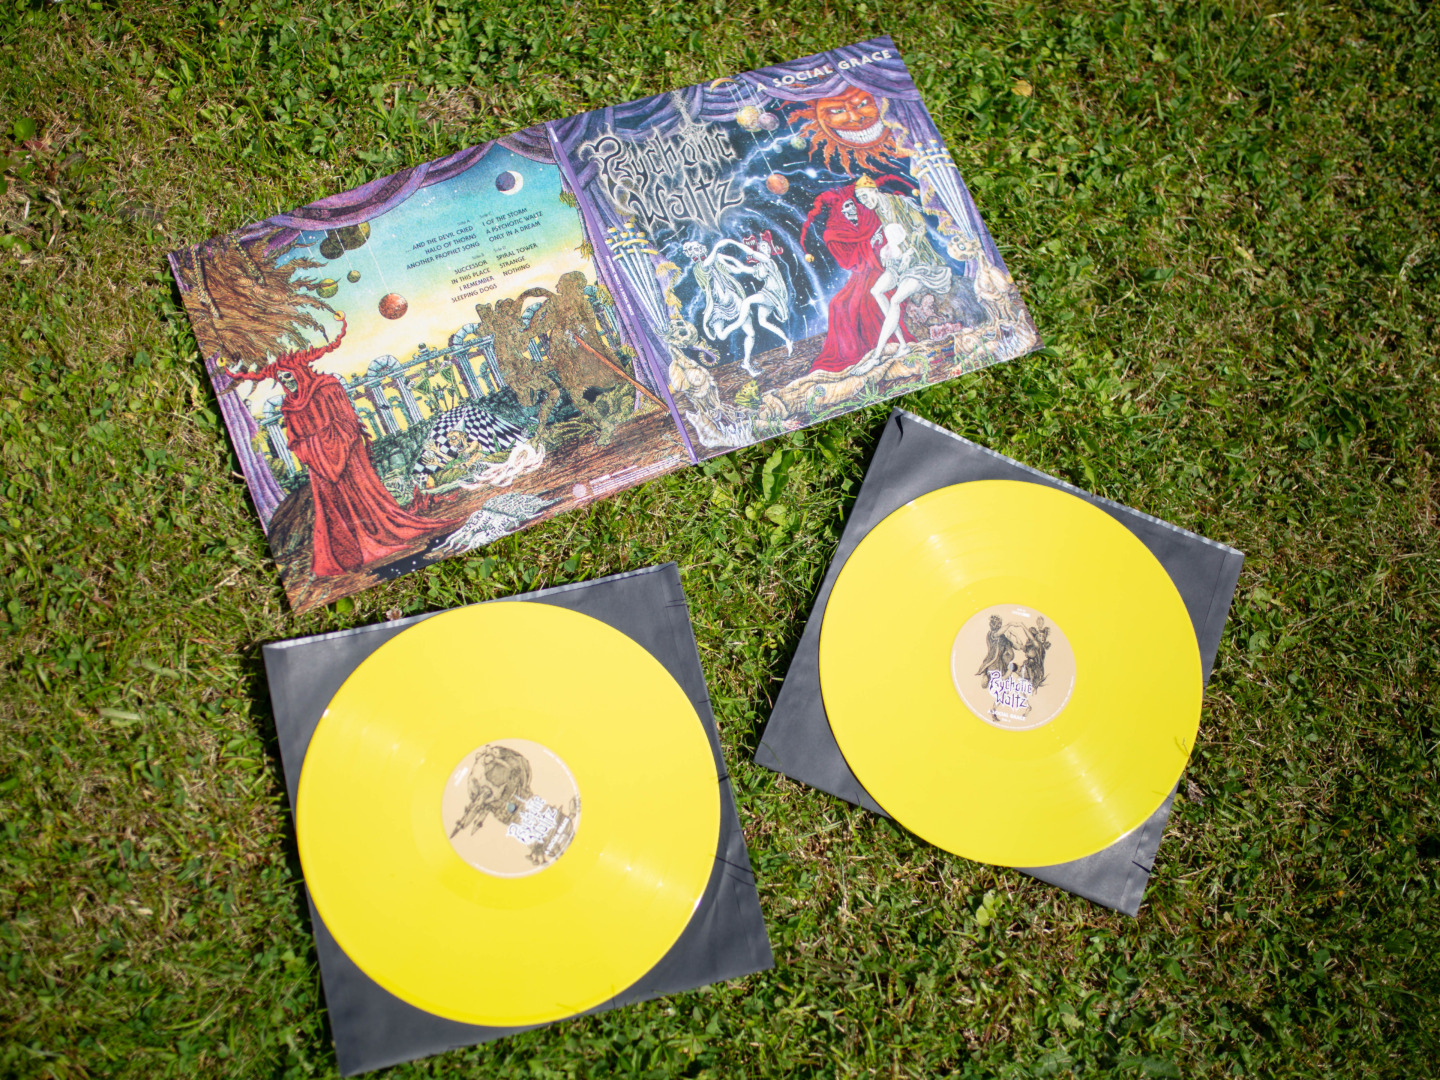 #VinylCorner: Psychotic Waltz – Bleeding / A Social Grace (Reissues)